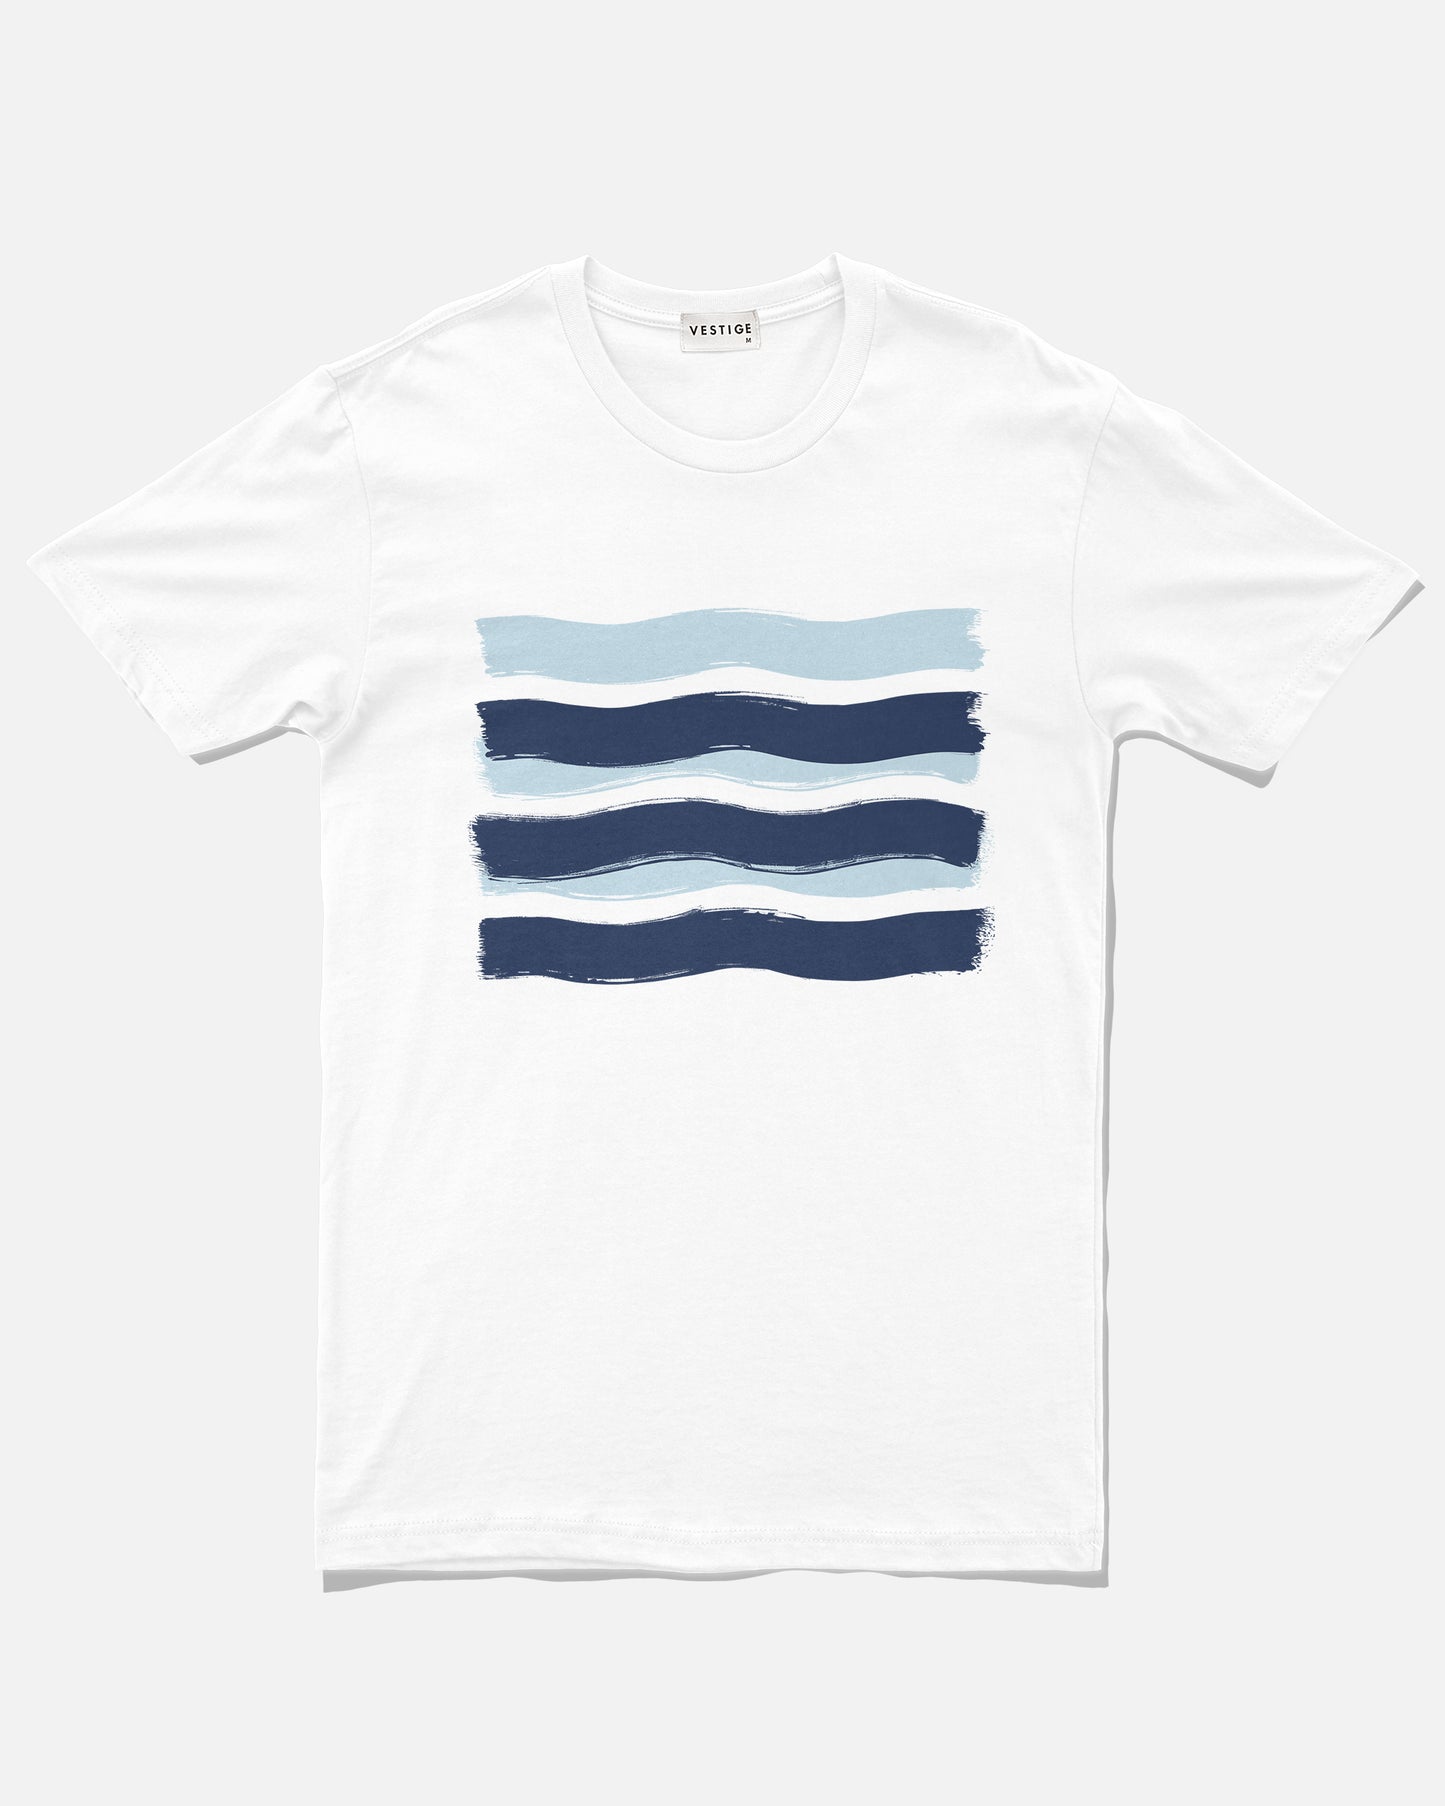 Waves Graphic T-Shirt, White